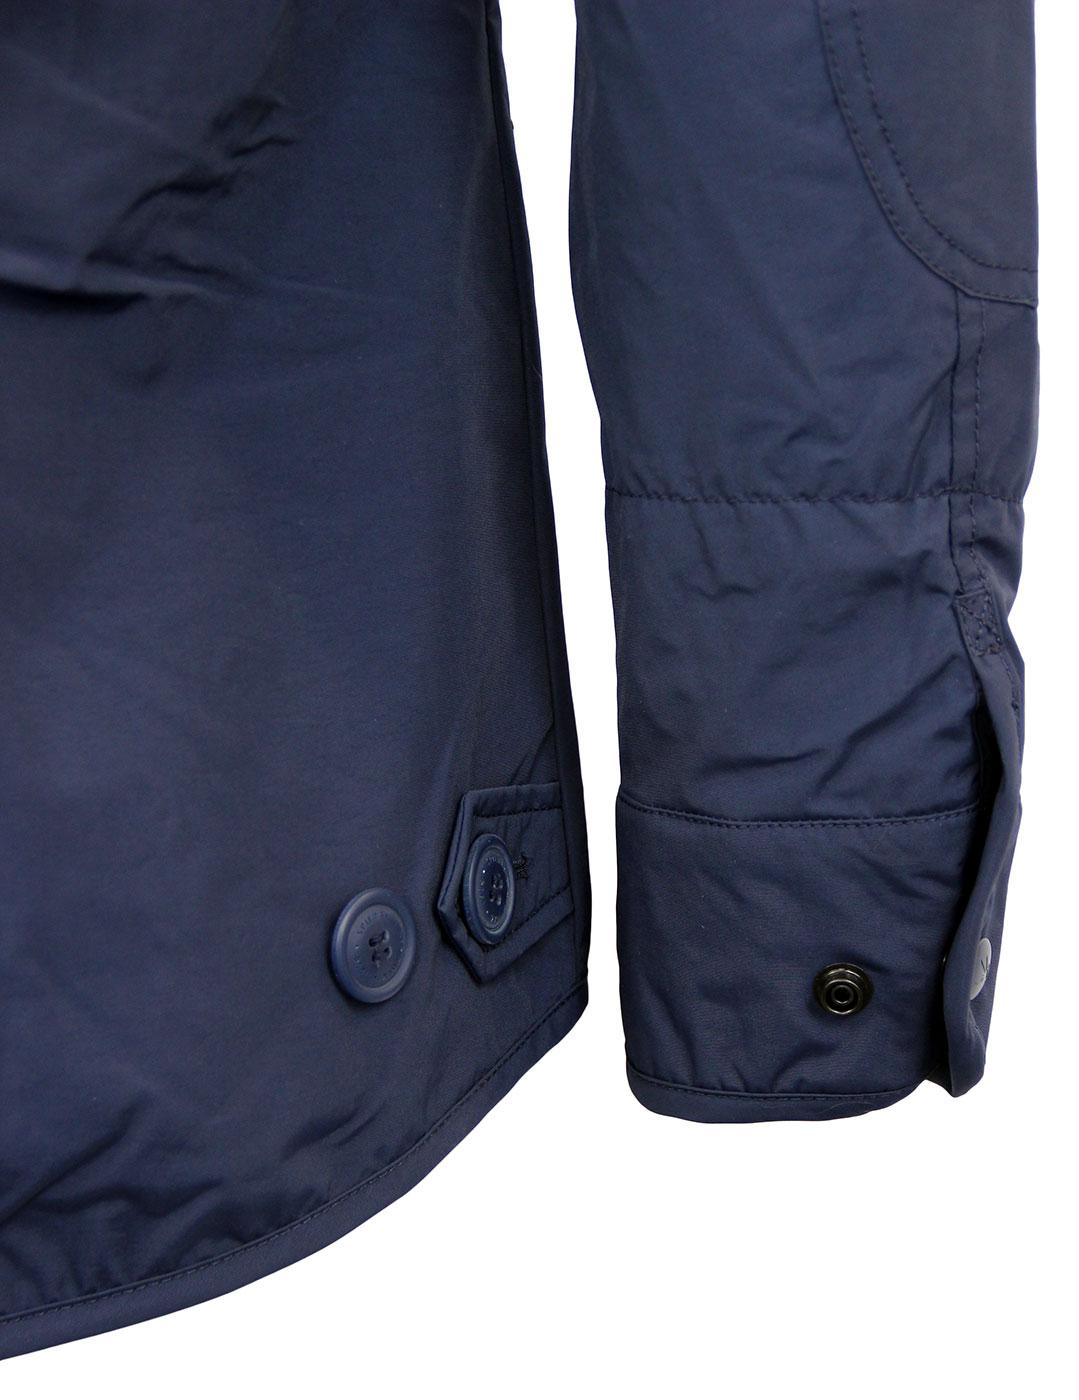 SPIEWAK Retro Mod Military Tekora Summer N3B Parka Jacket in Blue